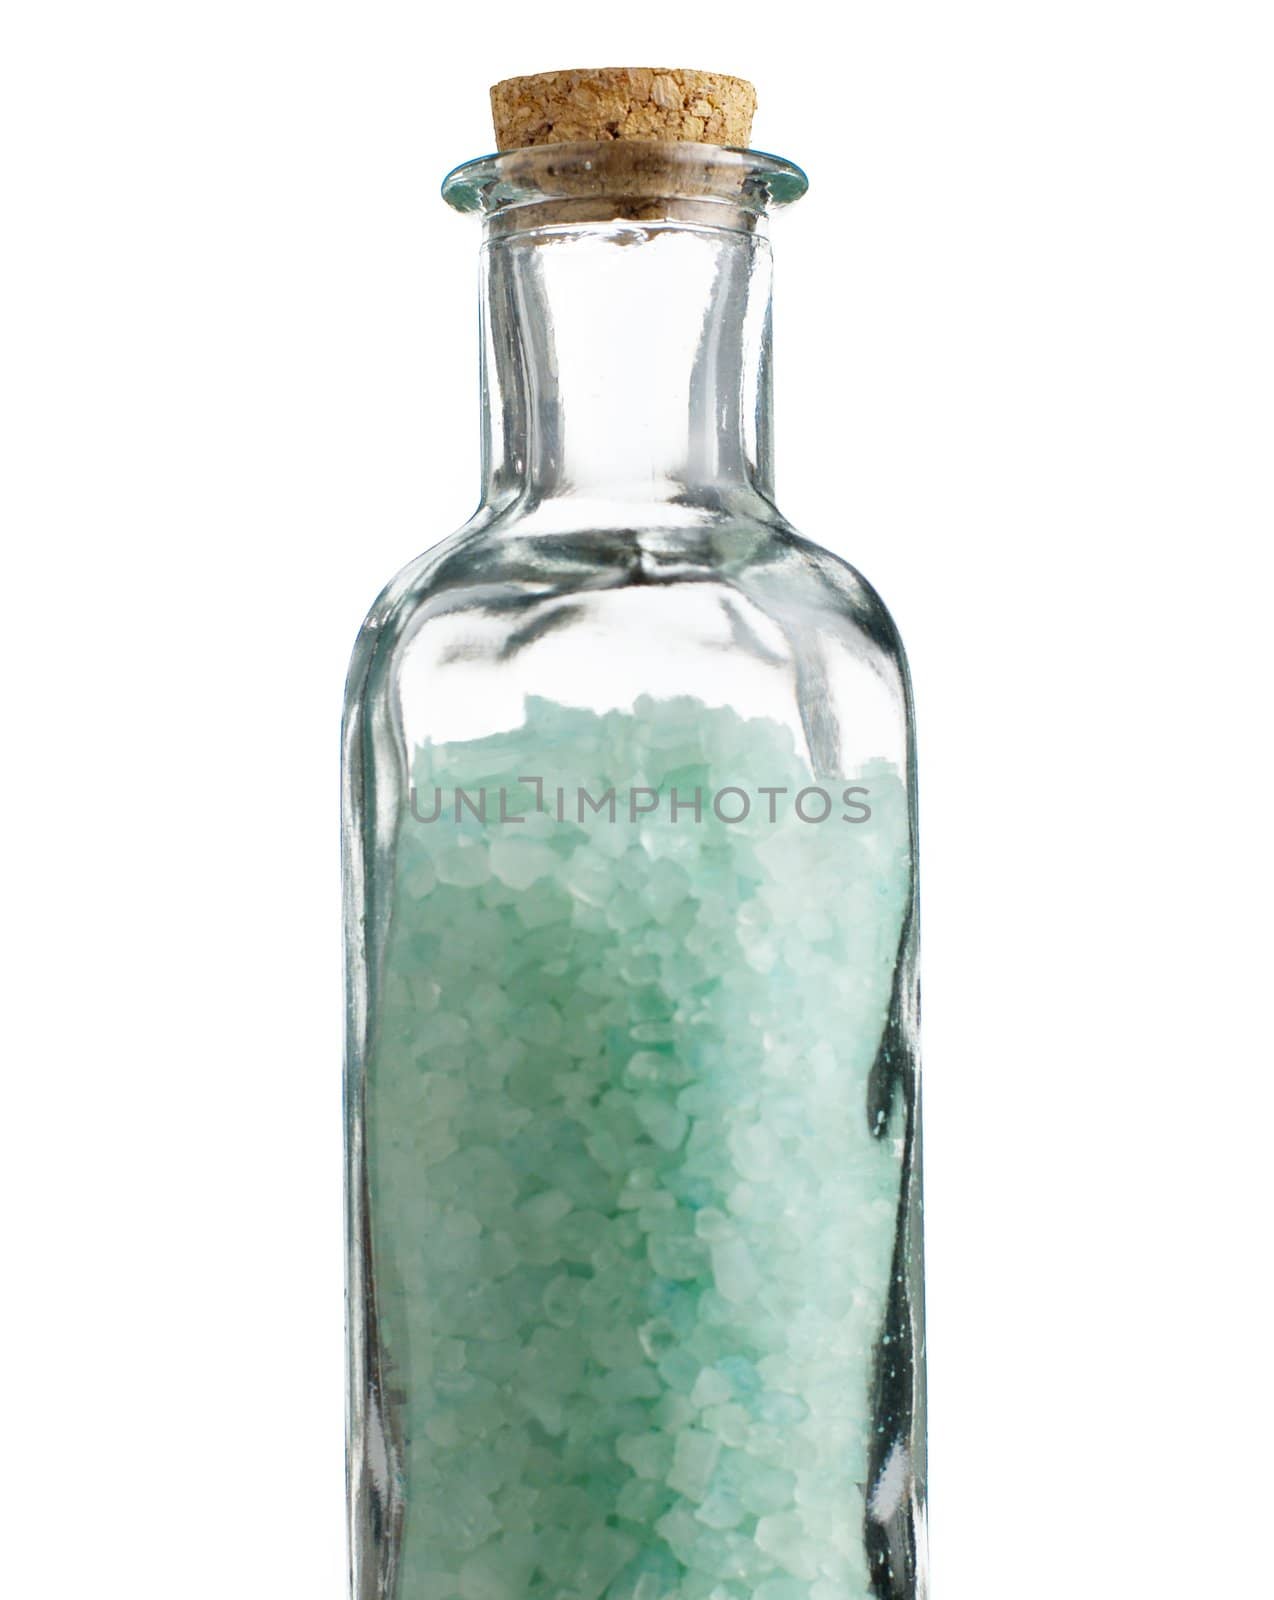 Colored Bath Salt by cardmaverick